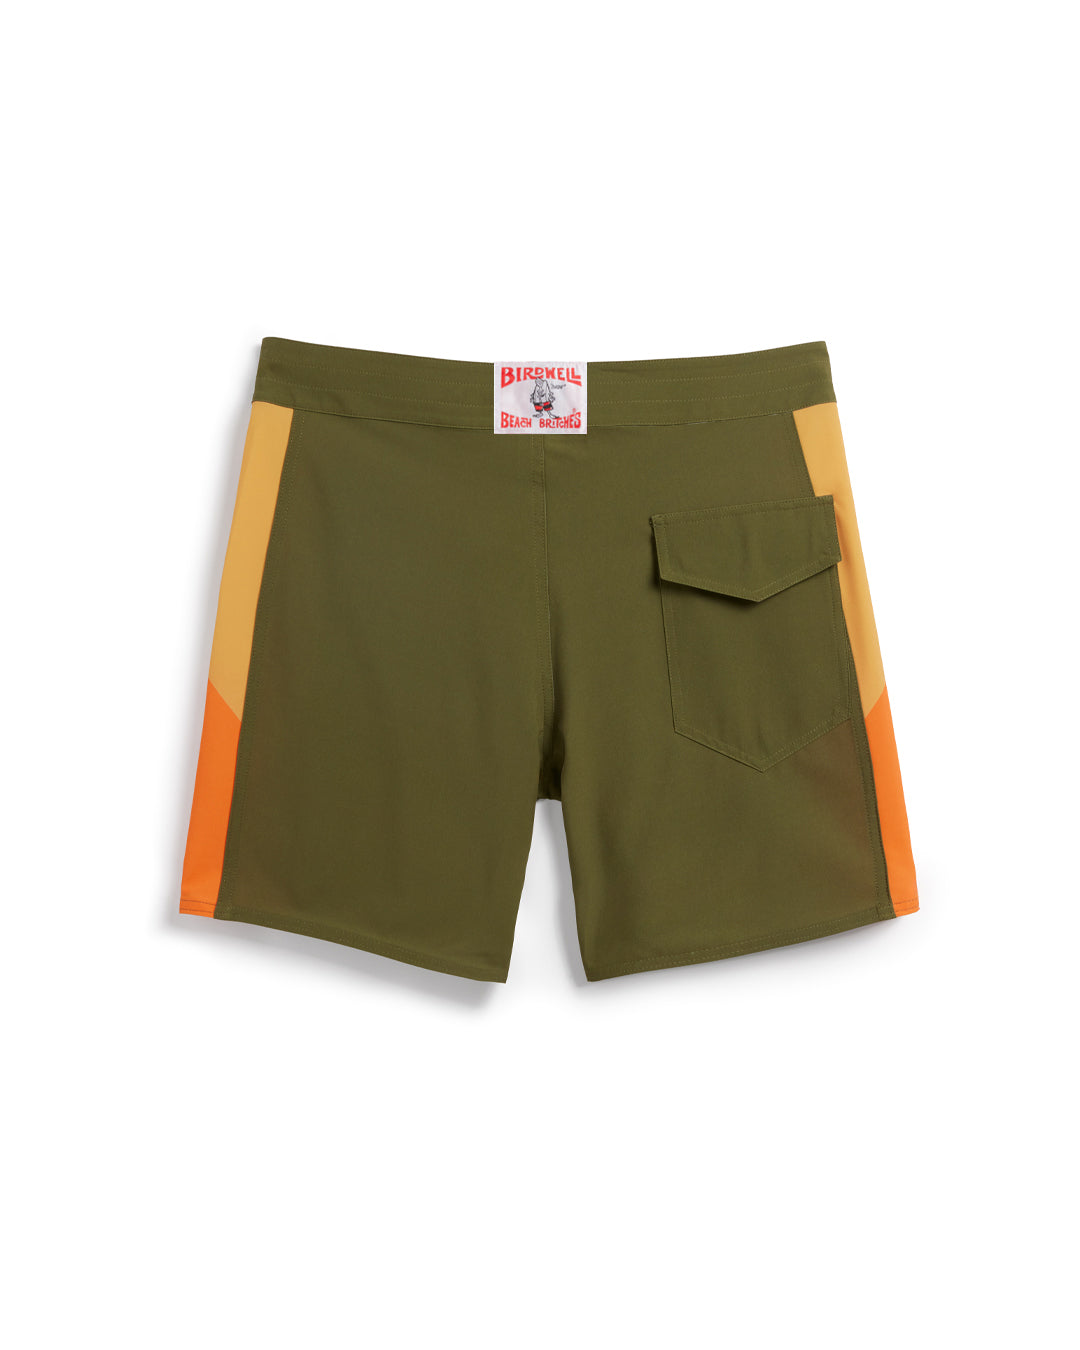 Board Shorts Handmade in the USA Since 1961 - Birdwell Beach Britches